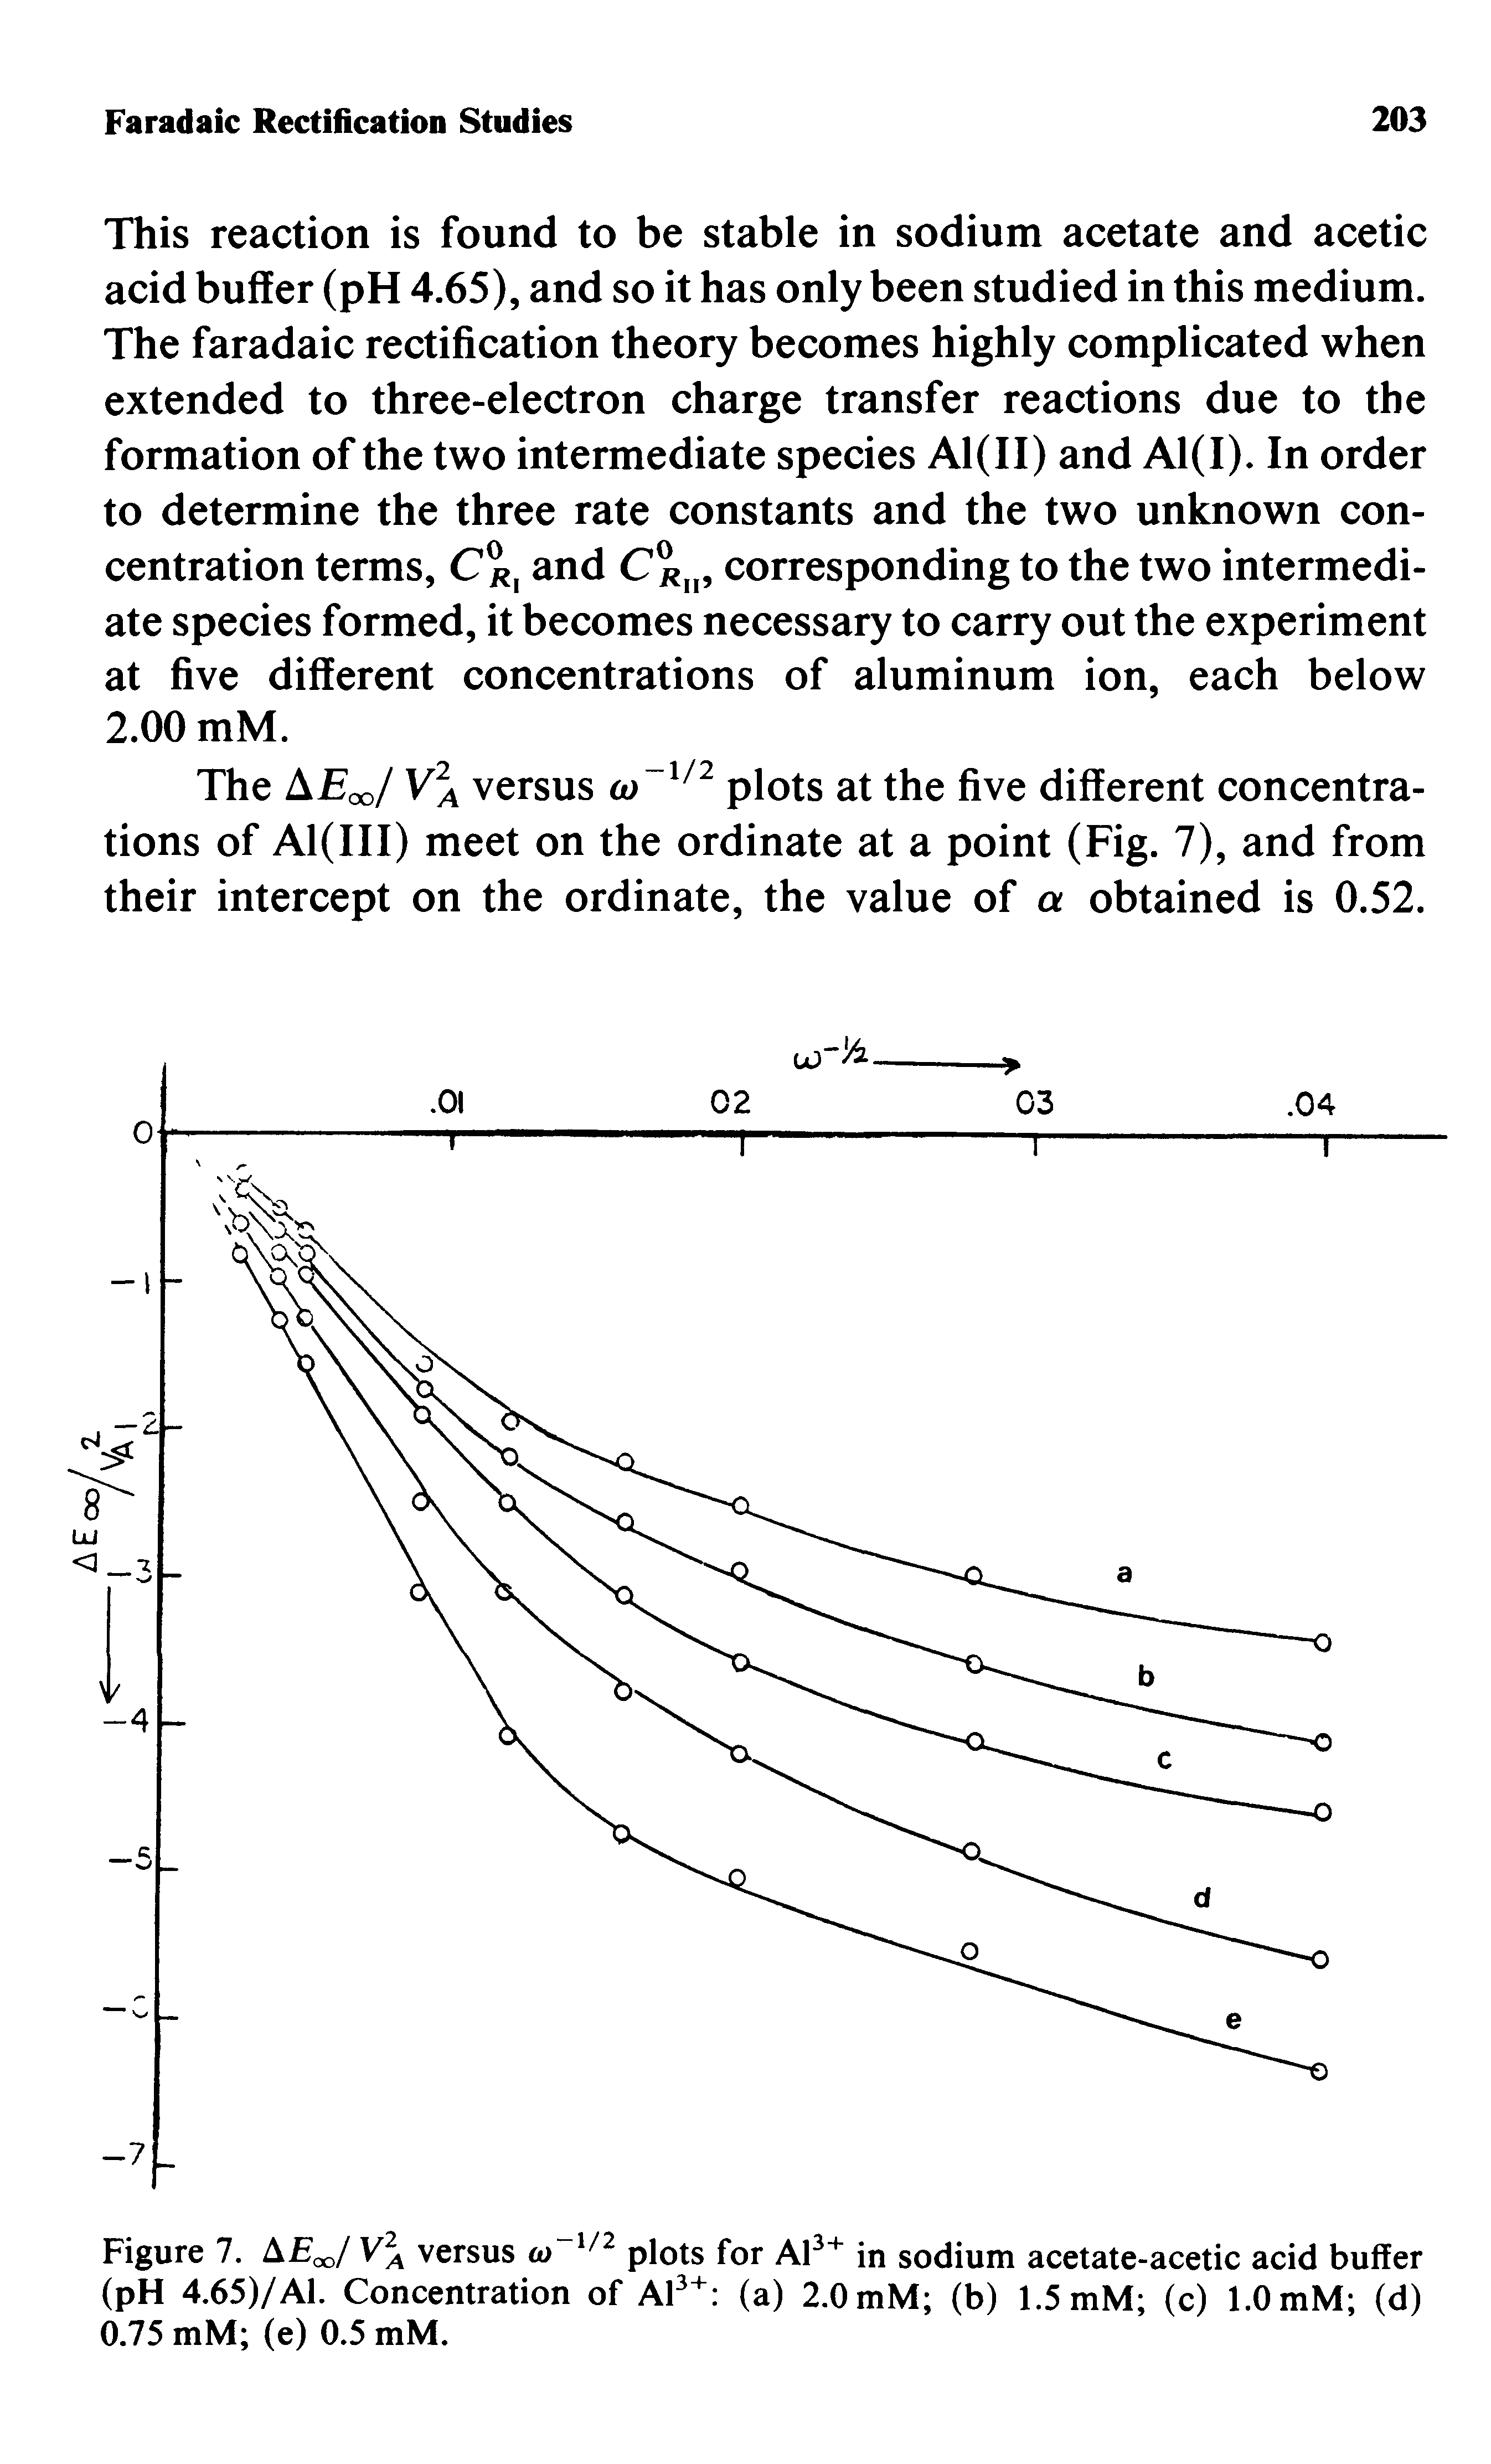 Figure 7. V versus to 1/2 plots for Al3+ in sodium acetate-acetic acid buffer...